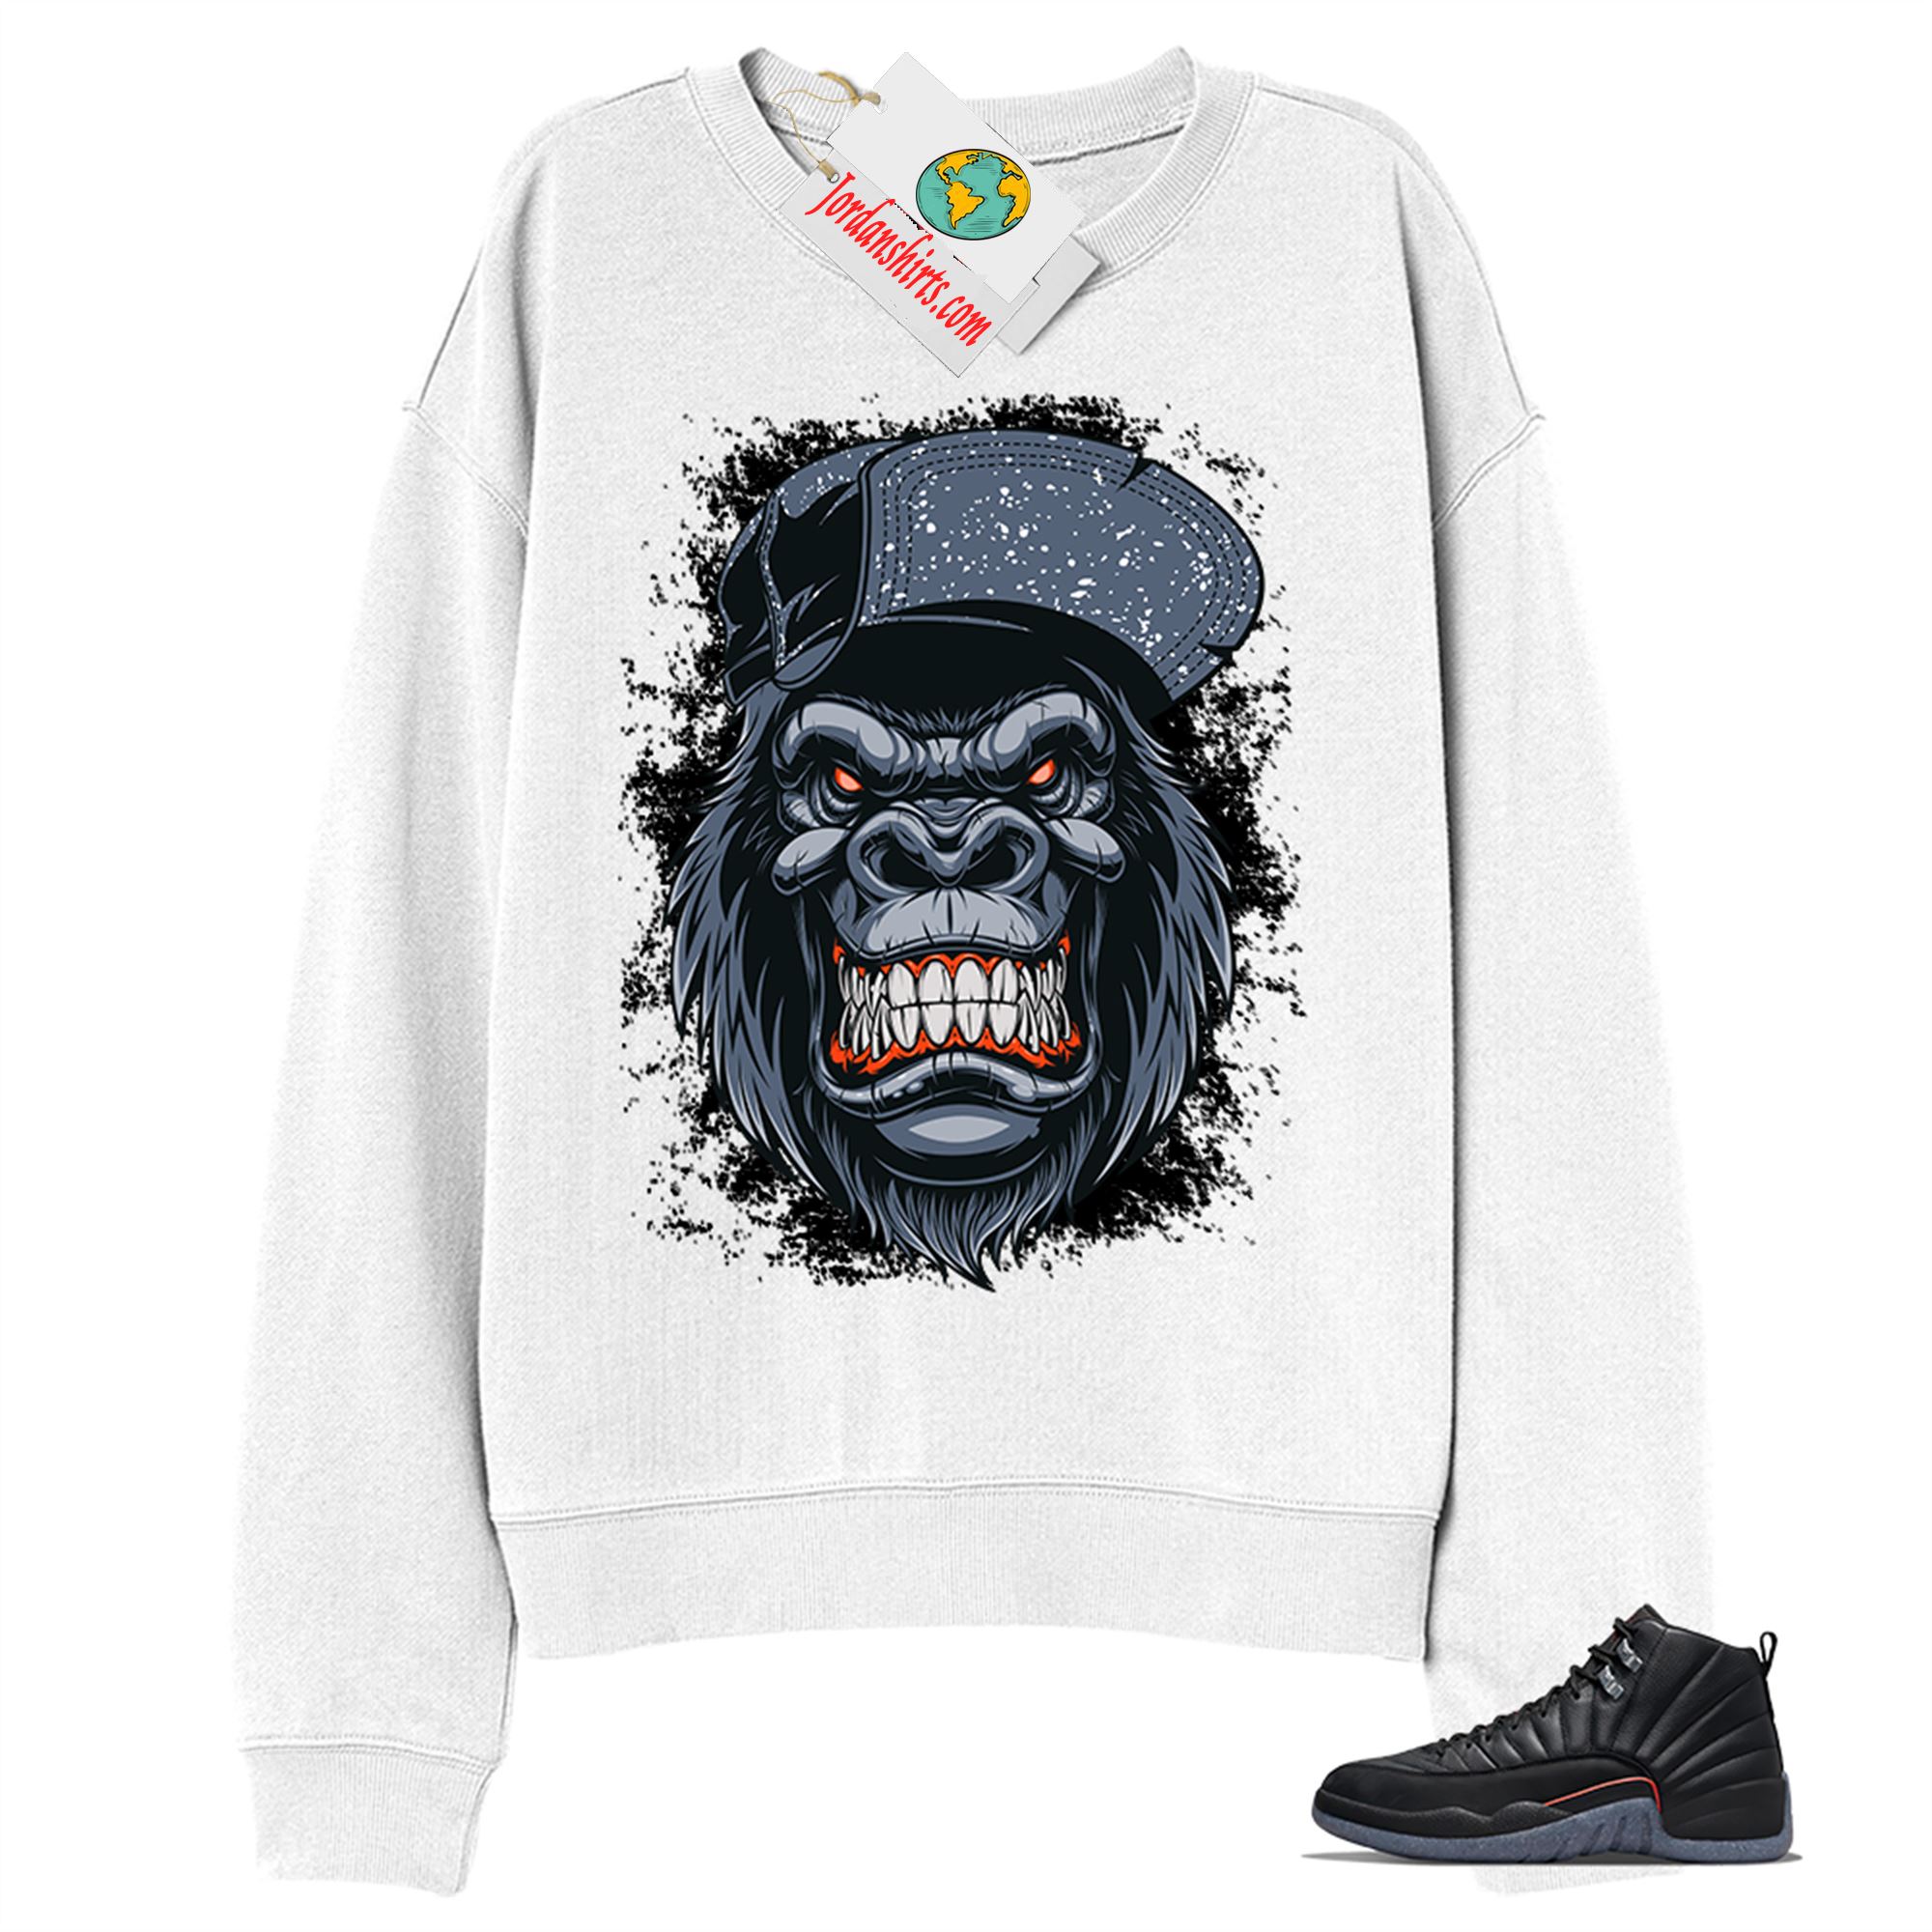 Jordan 12 Sweatshirt, Ferocious Gorilla White Sweatshirt Air Jordan 12 Utility Grind 12s Size Up To 5xl